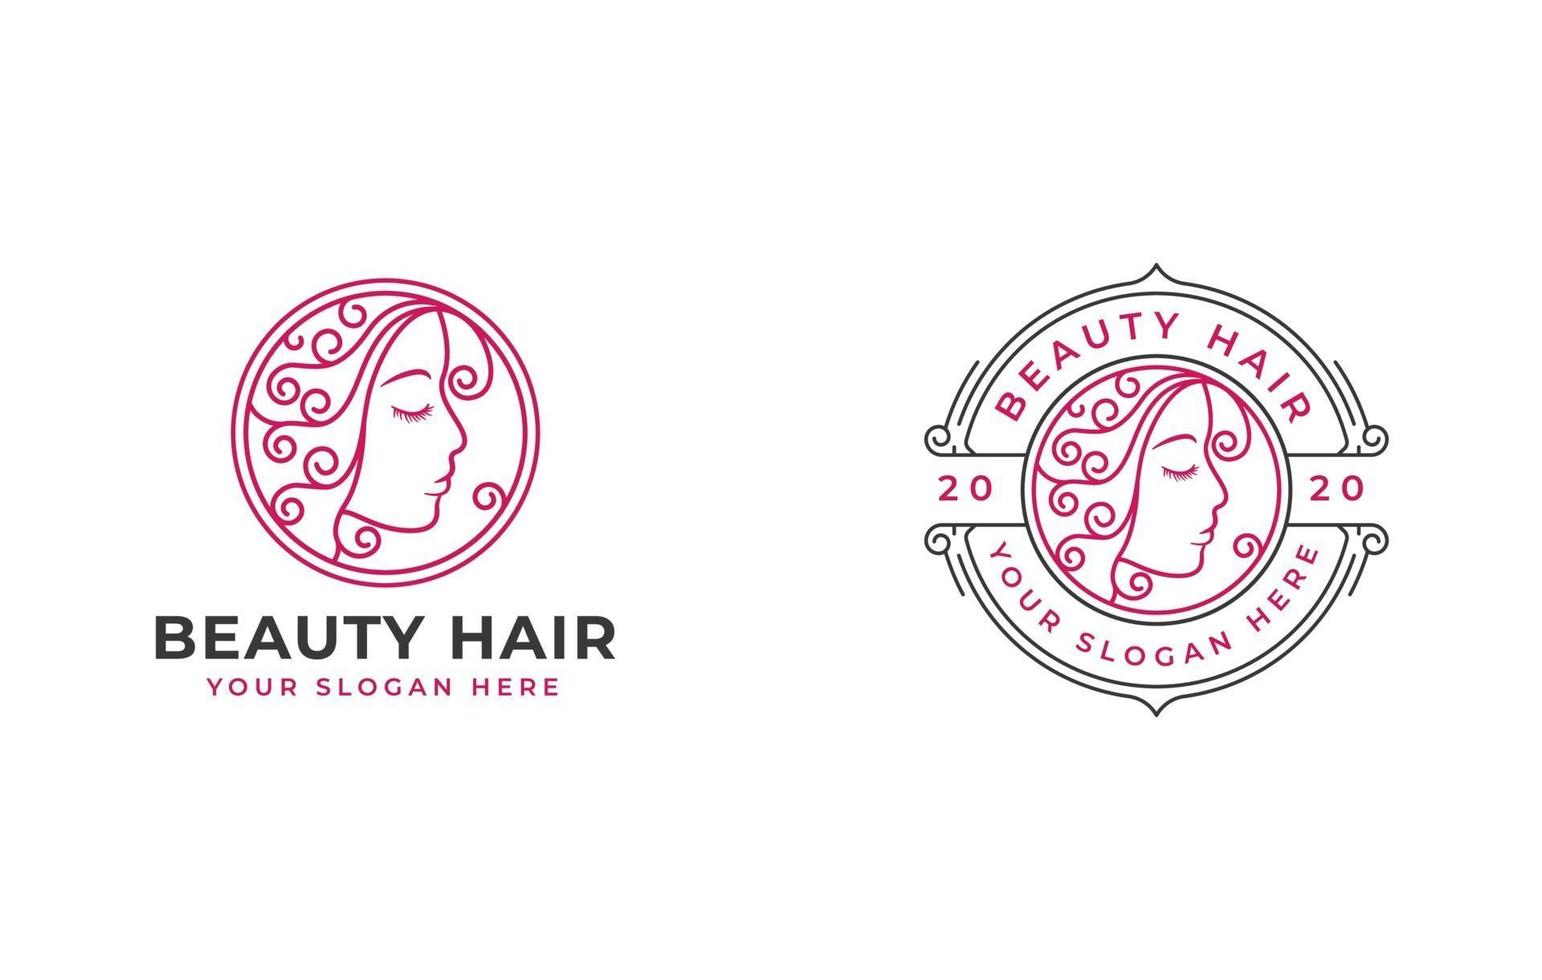 Beauty salon Woman Logo design with circle badge vector